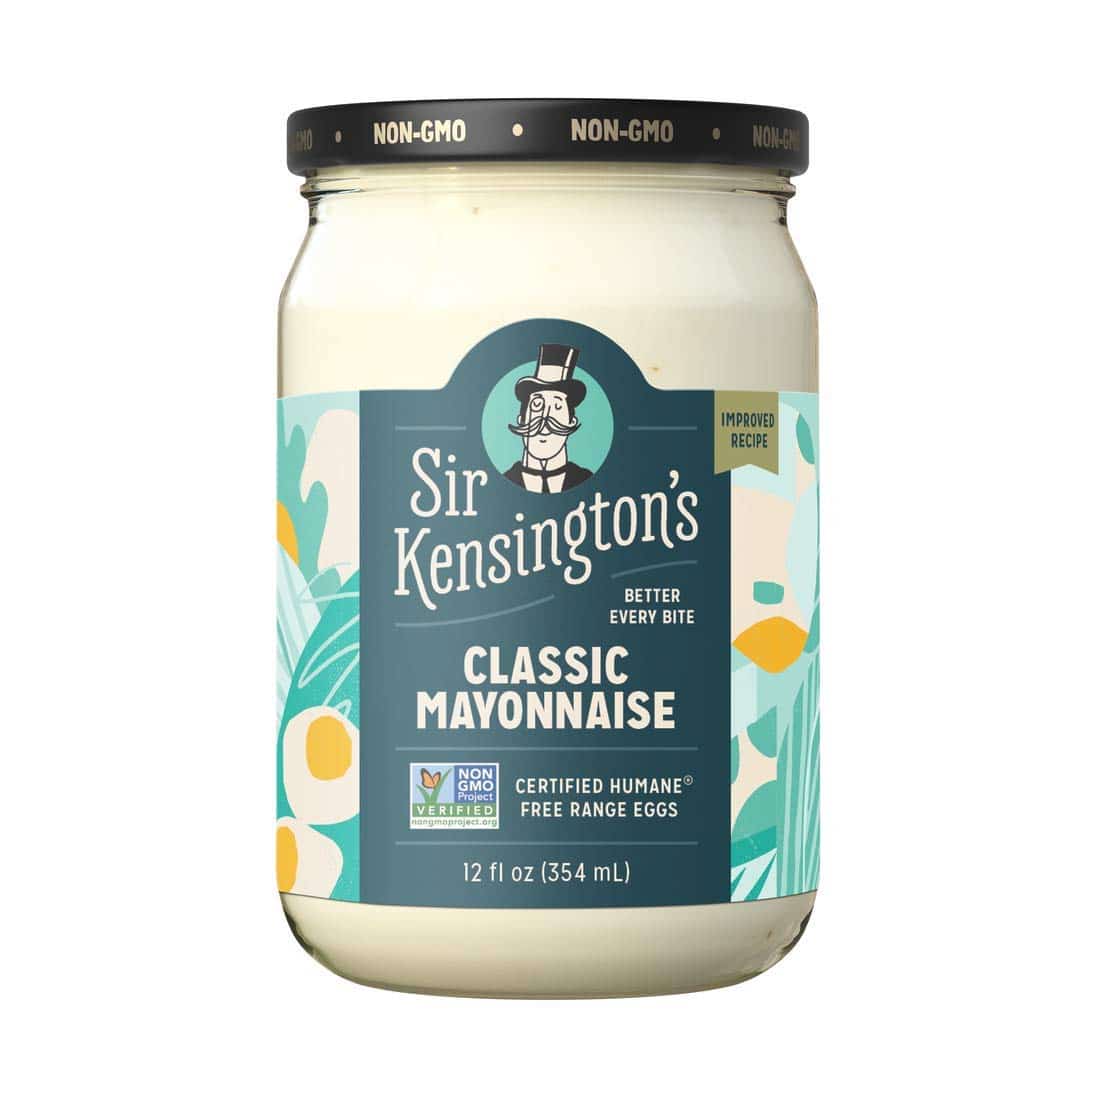 Sir Kensington's Mayonnaise Classic Mayo Gluten Free